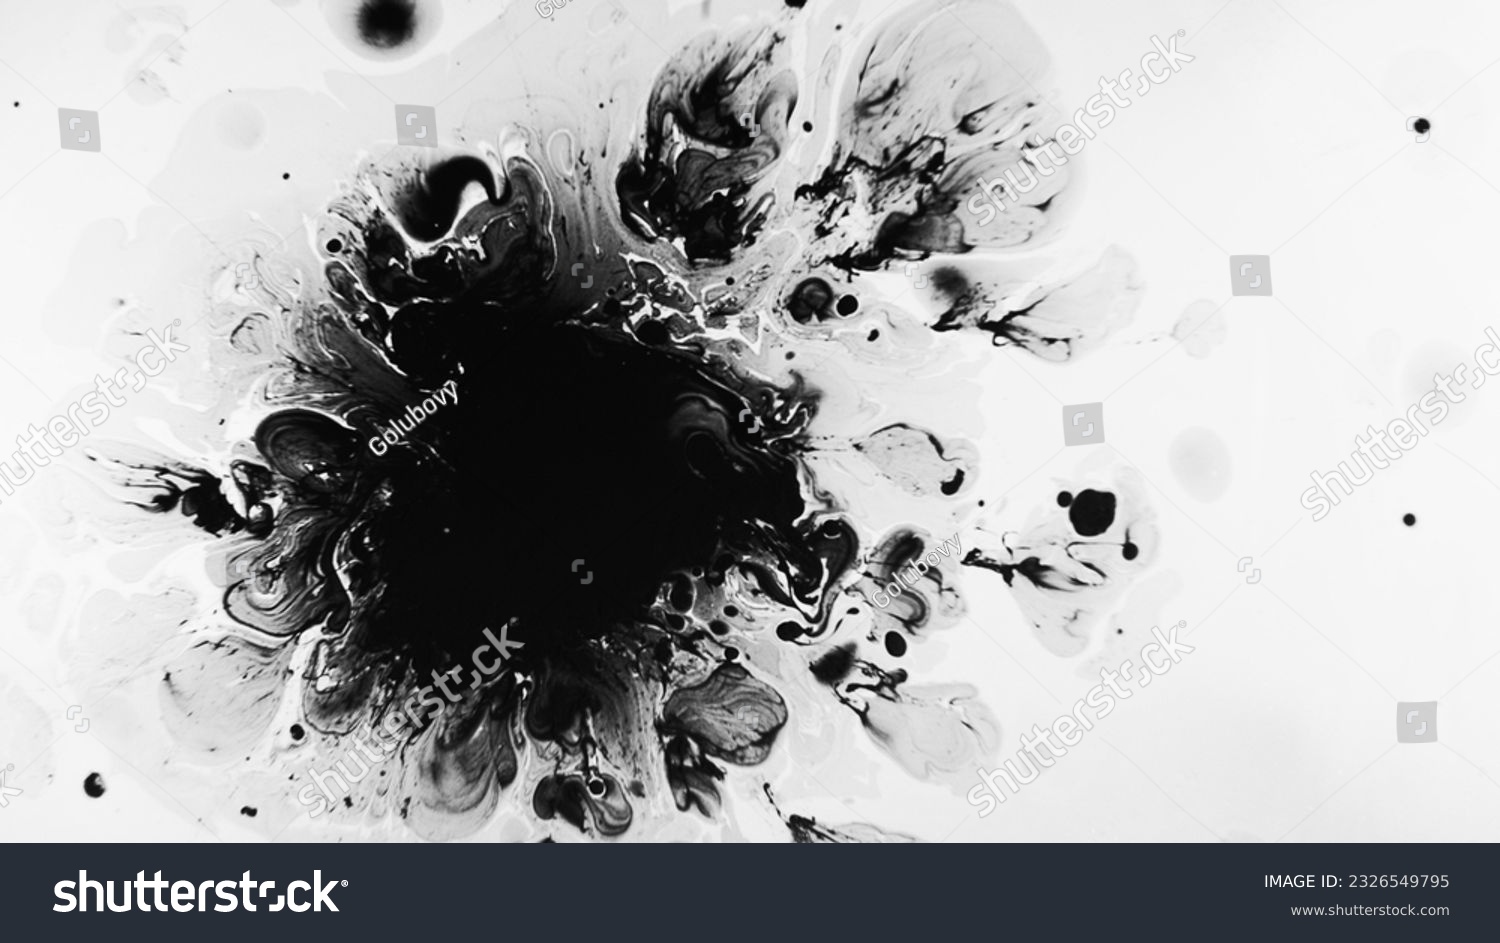 Ink splatter. Oil spill. Dark fluid swirl spreading blending in supernatural pattern of black watercolor abstract illustration. #2326549795